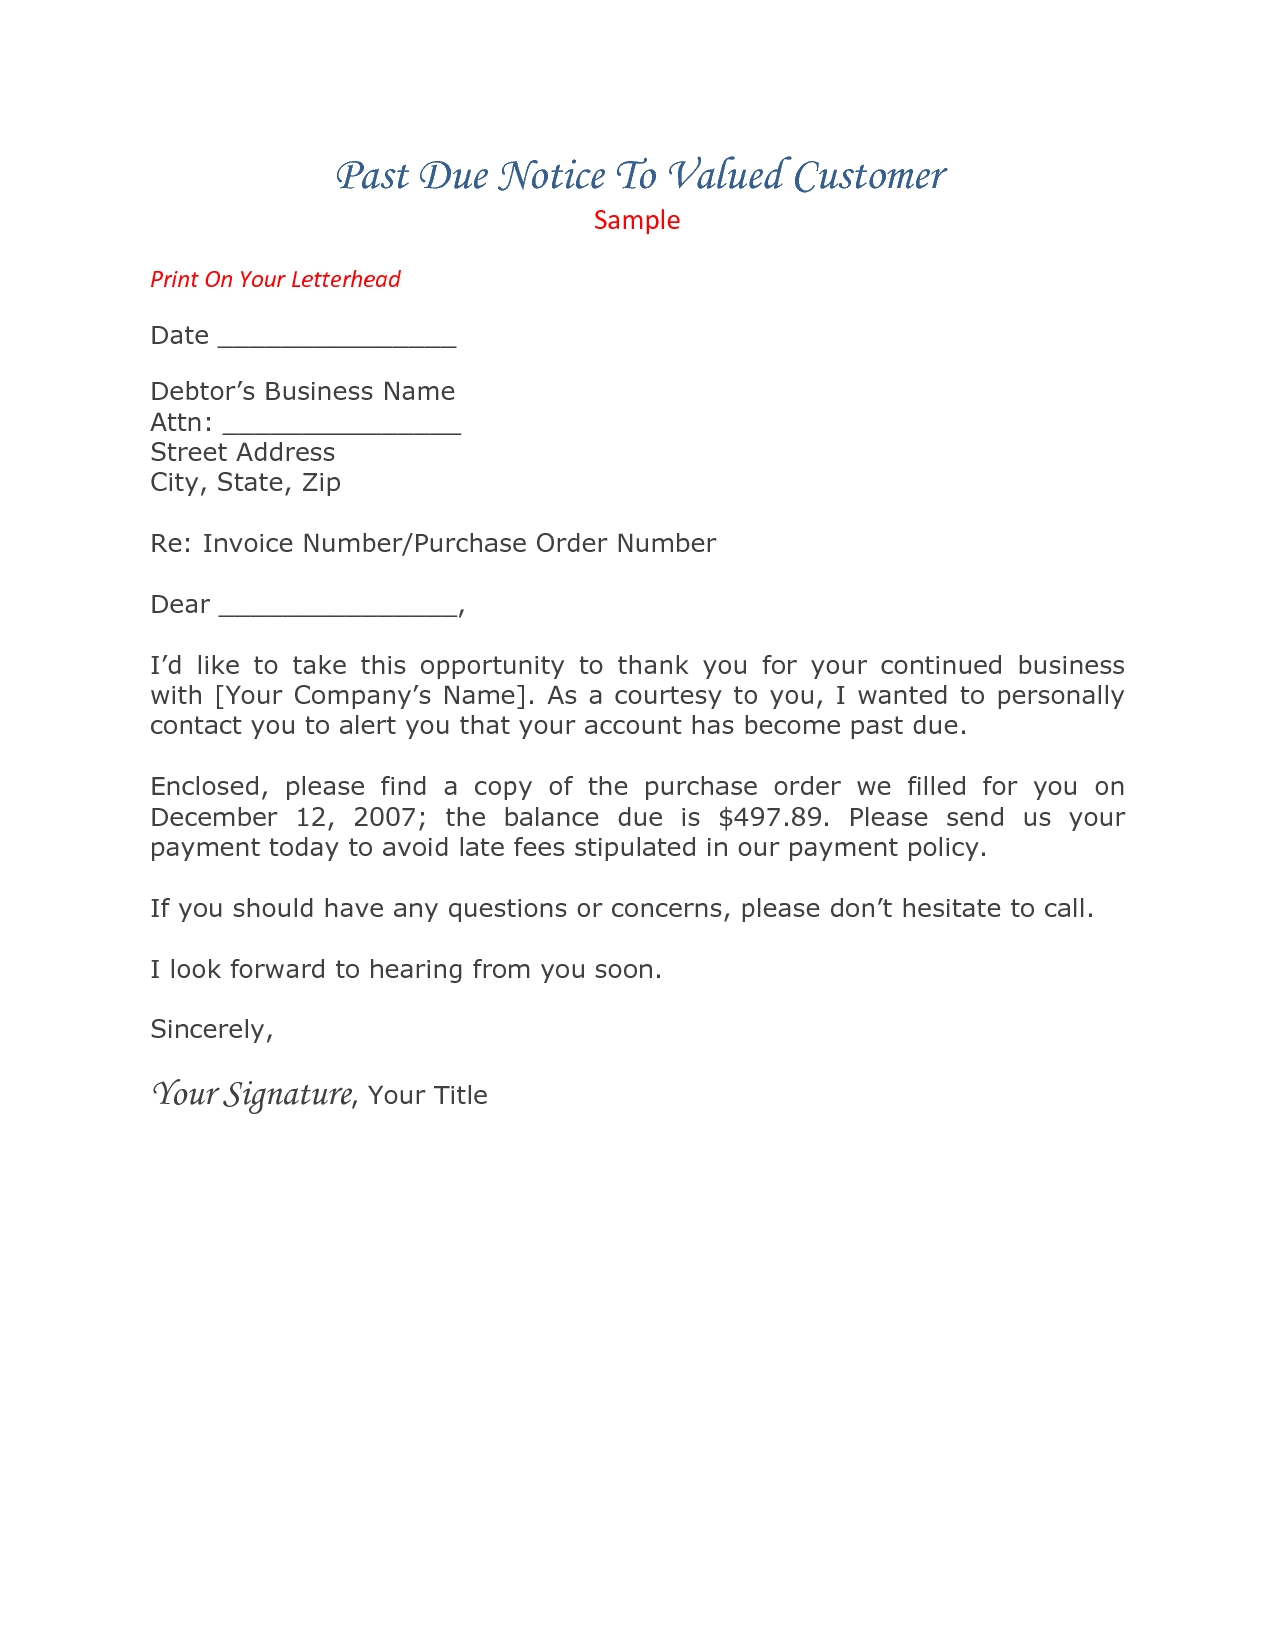 timely invoice letter job cover letter ex bubble letter s design past due invoice letter